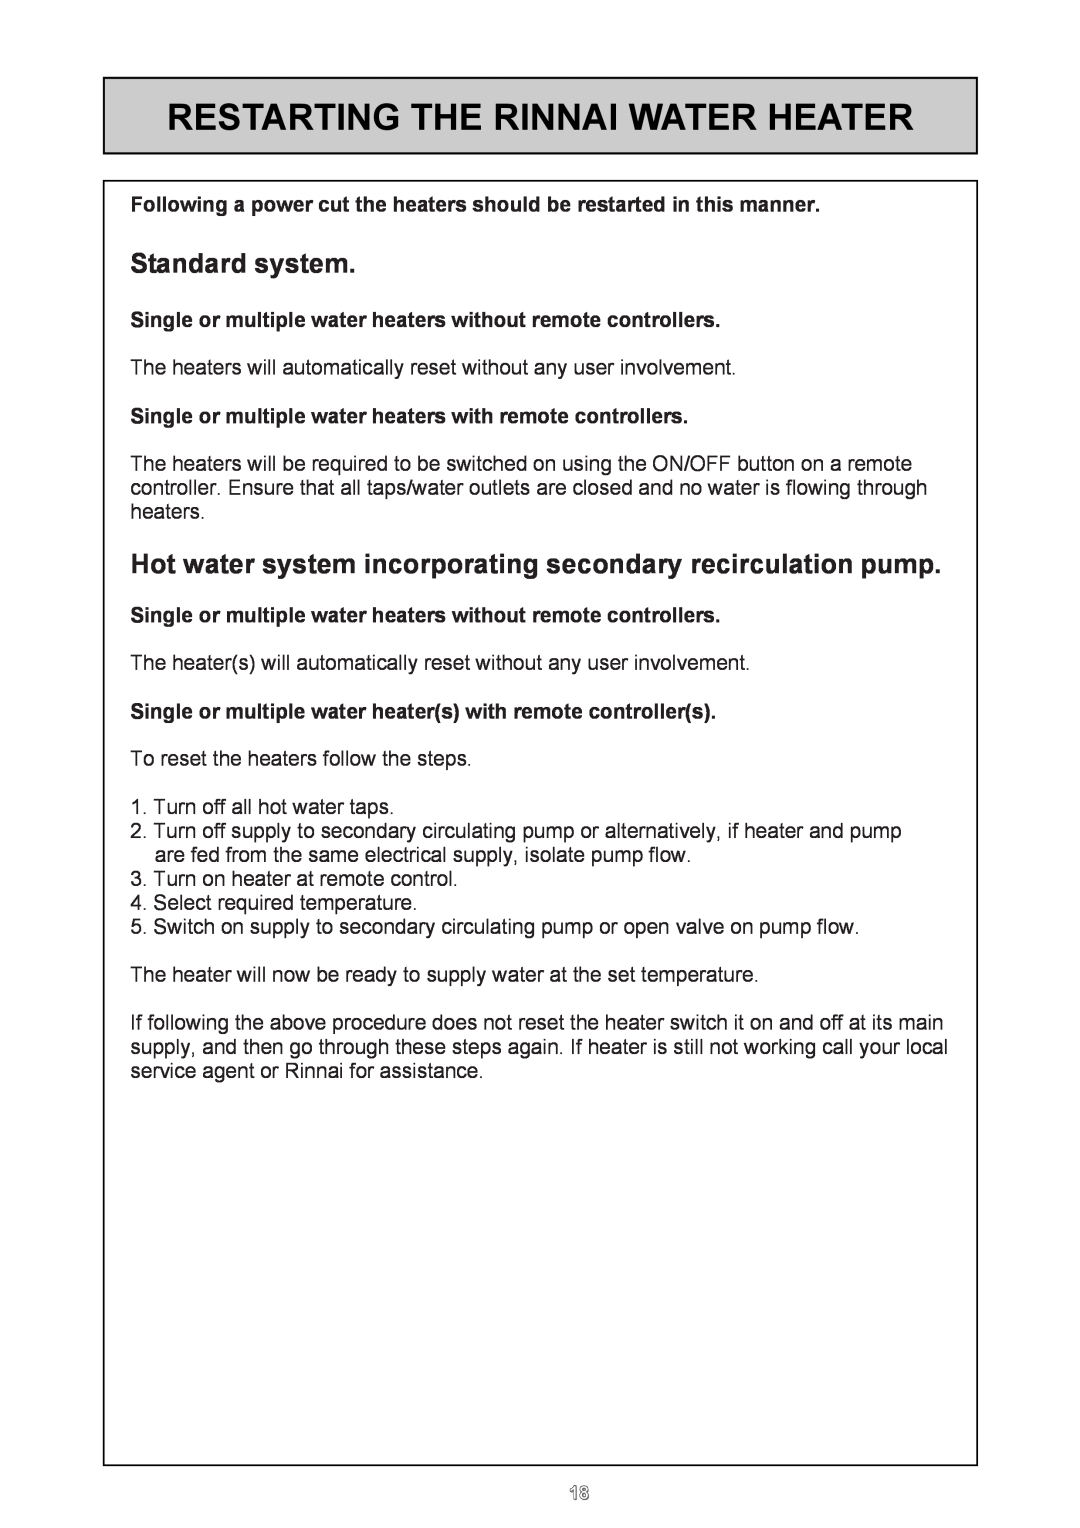 Rinnai REU - 16 FUA - E user manual Restarting The Rinnai Water Heater, Standard system 